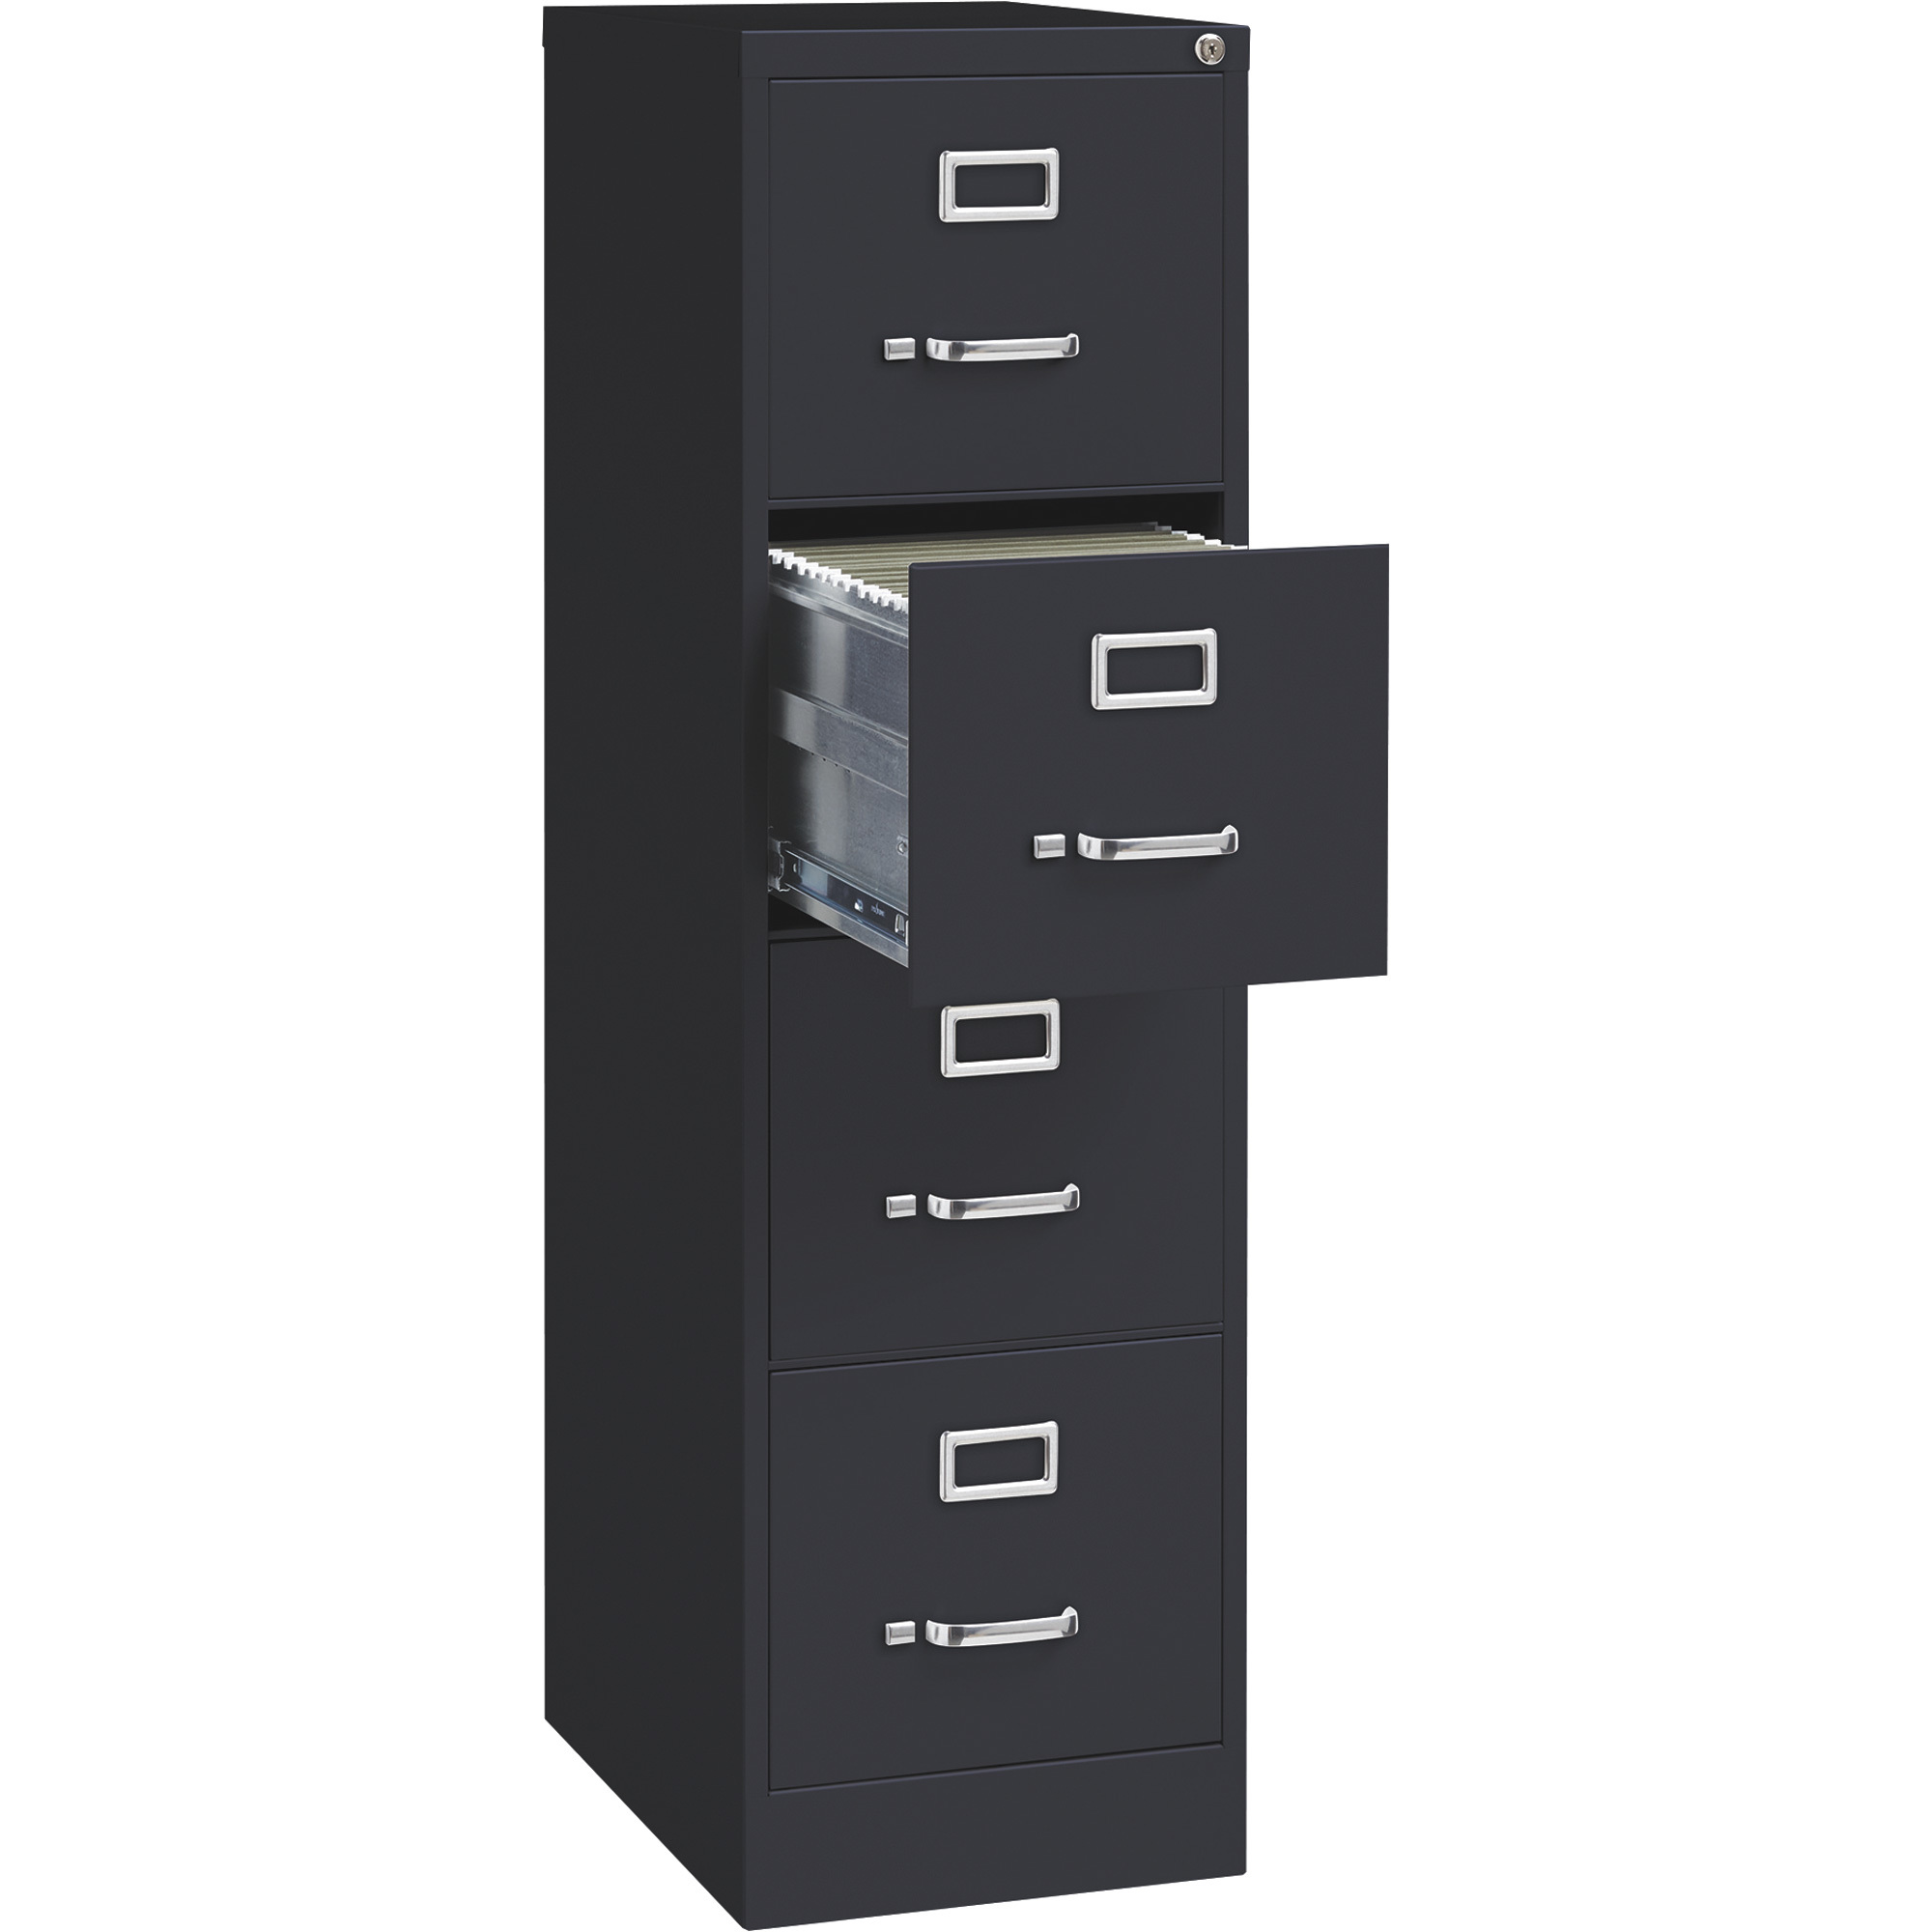 Hirsh Industries 4-Drawer Letter File Cabinet â Black, 15Inch W x 22Inch D x 52Inch H, Model 17892